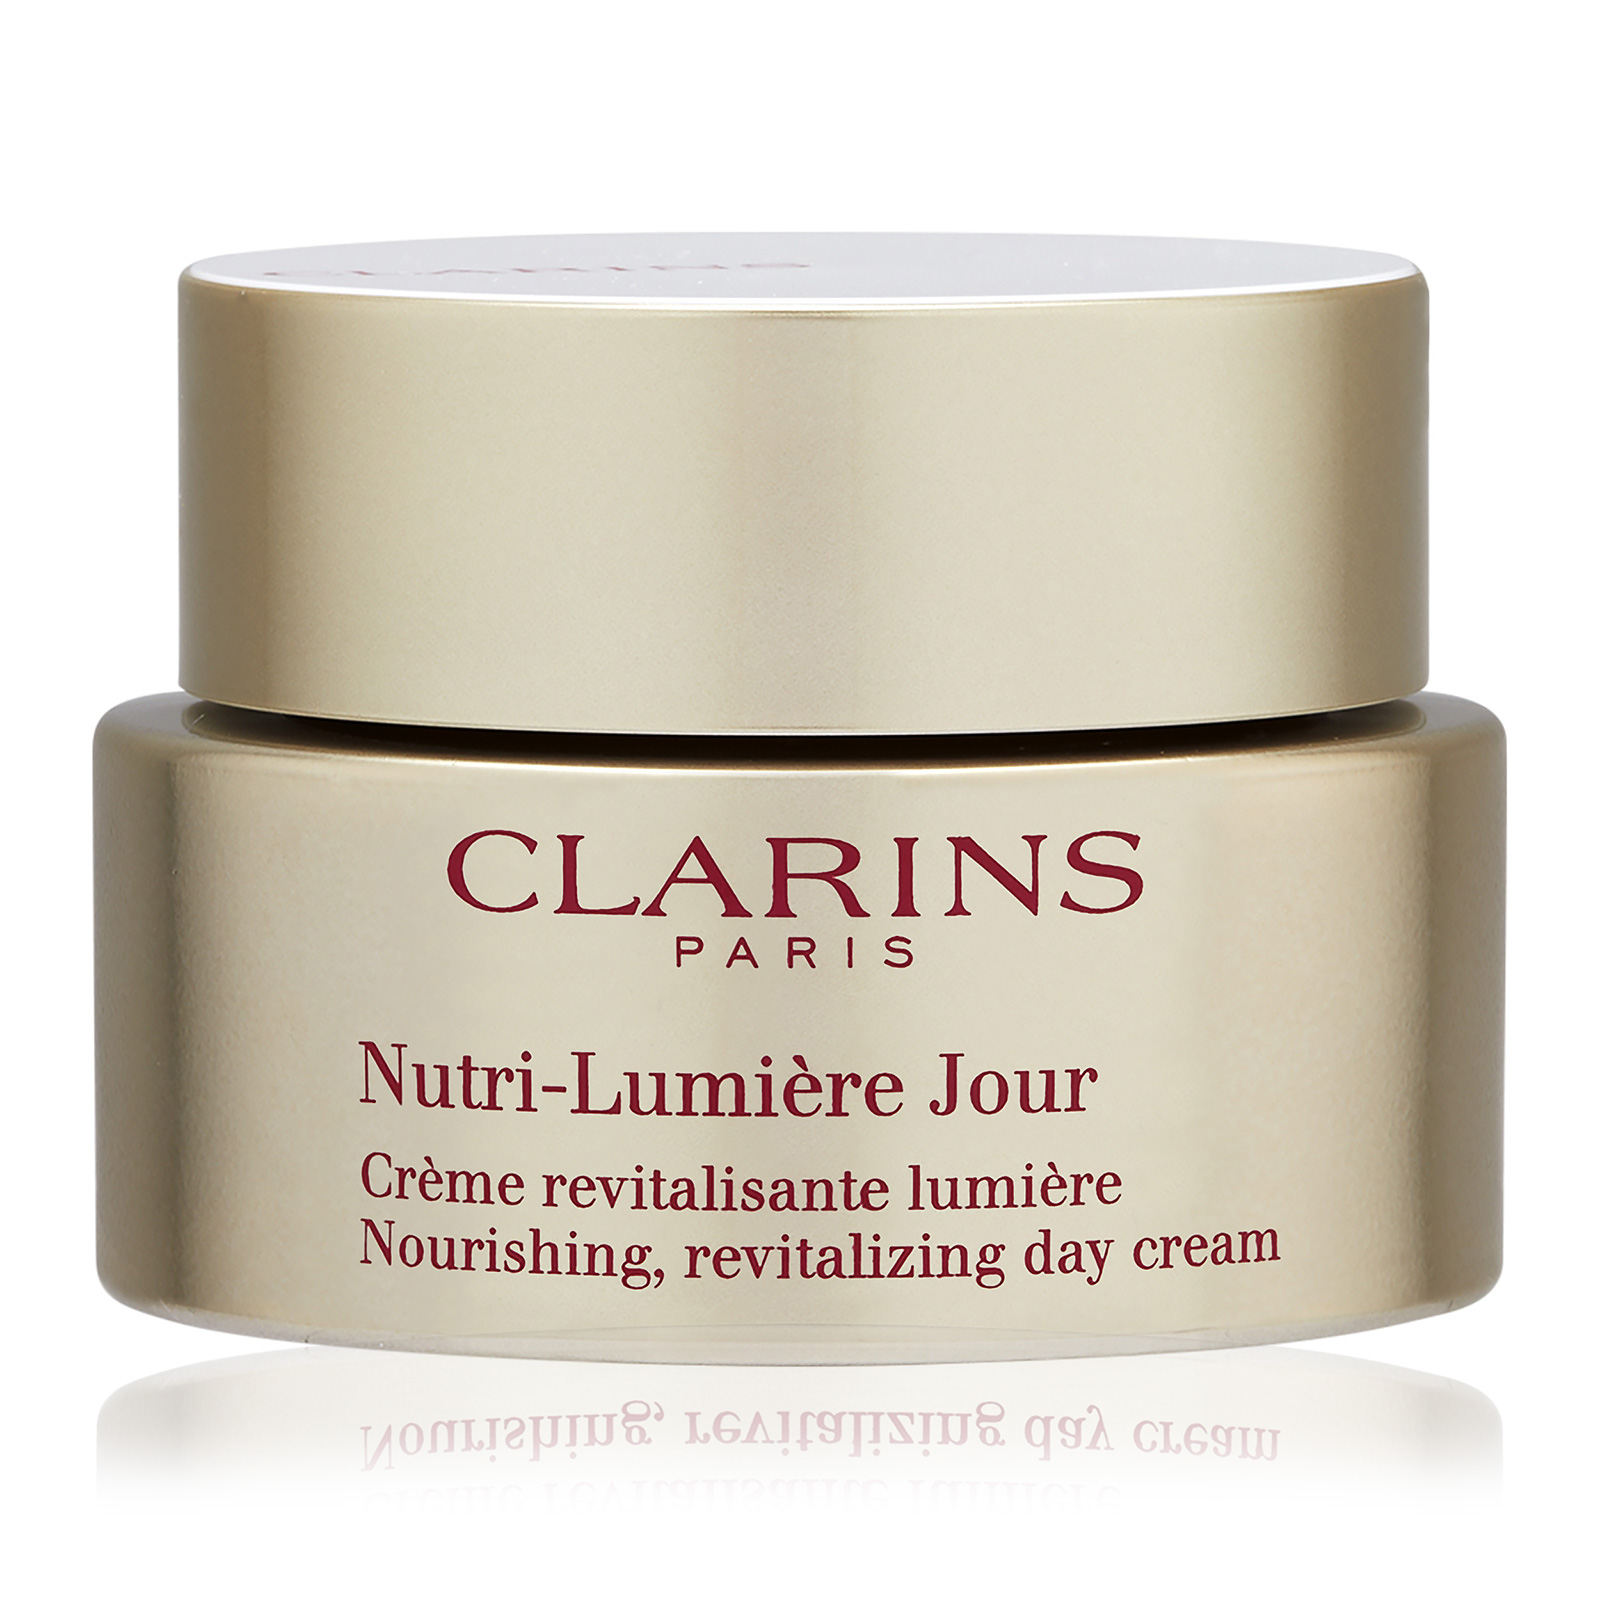 Nutri-Lumiere Jour Nourishing, Revitalizing Day Cream